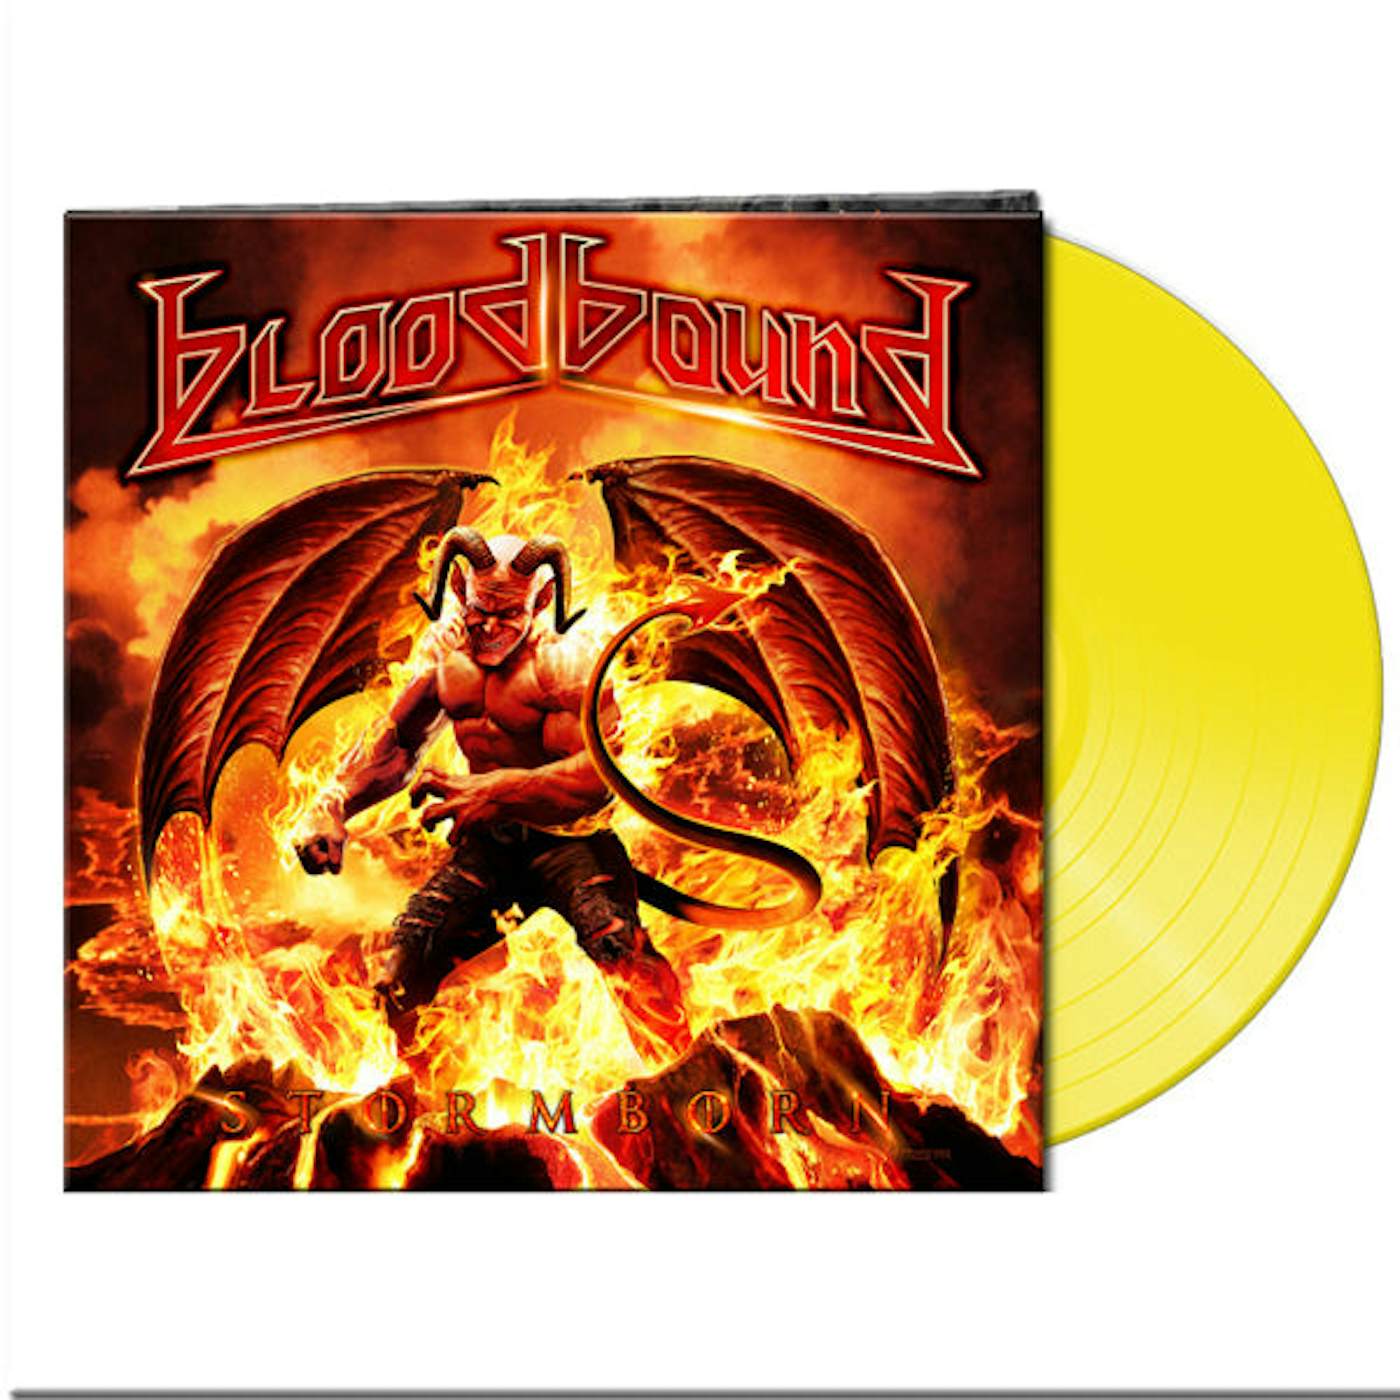 Bloodbound LP - Stormborn (Clear Yellow Vinyl)